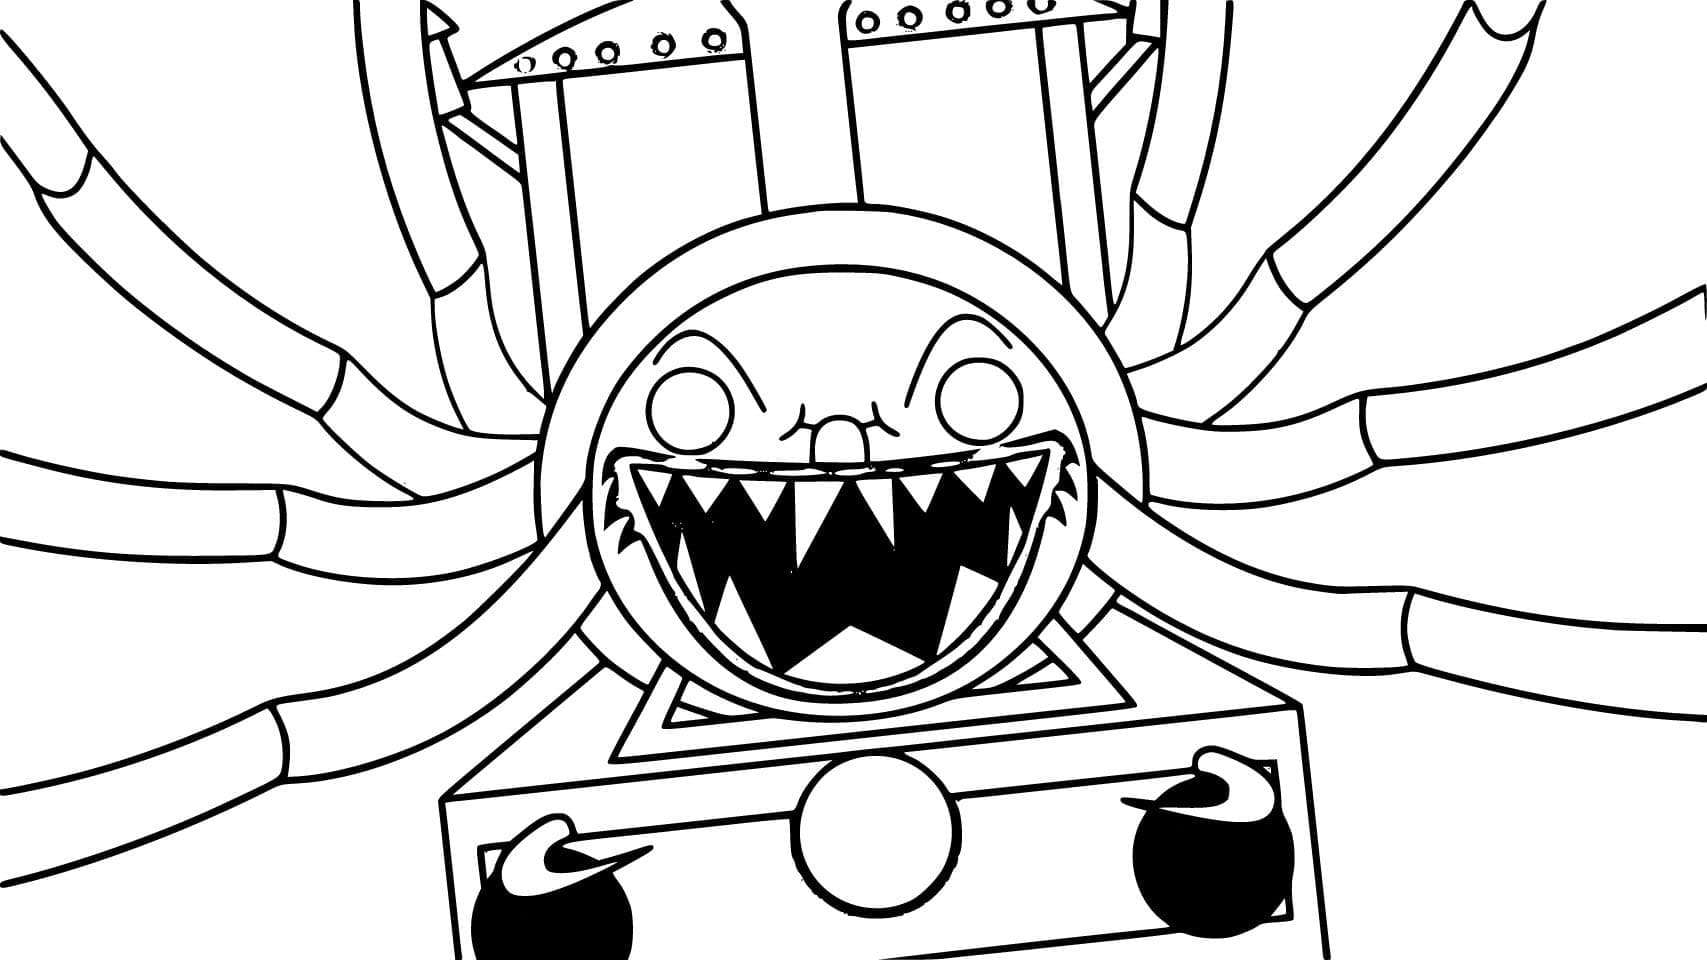 Monster Choo-Choo Charles coloring page - Download, Print or Color ...